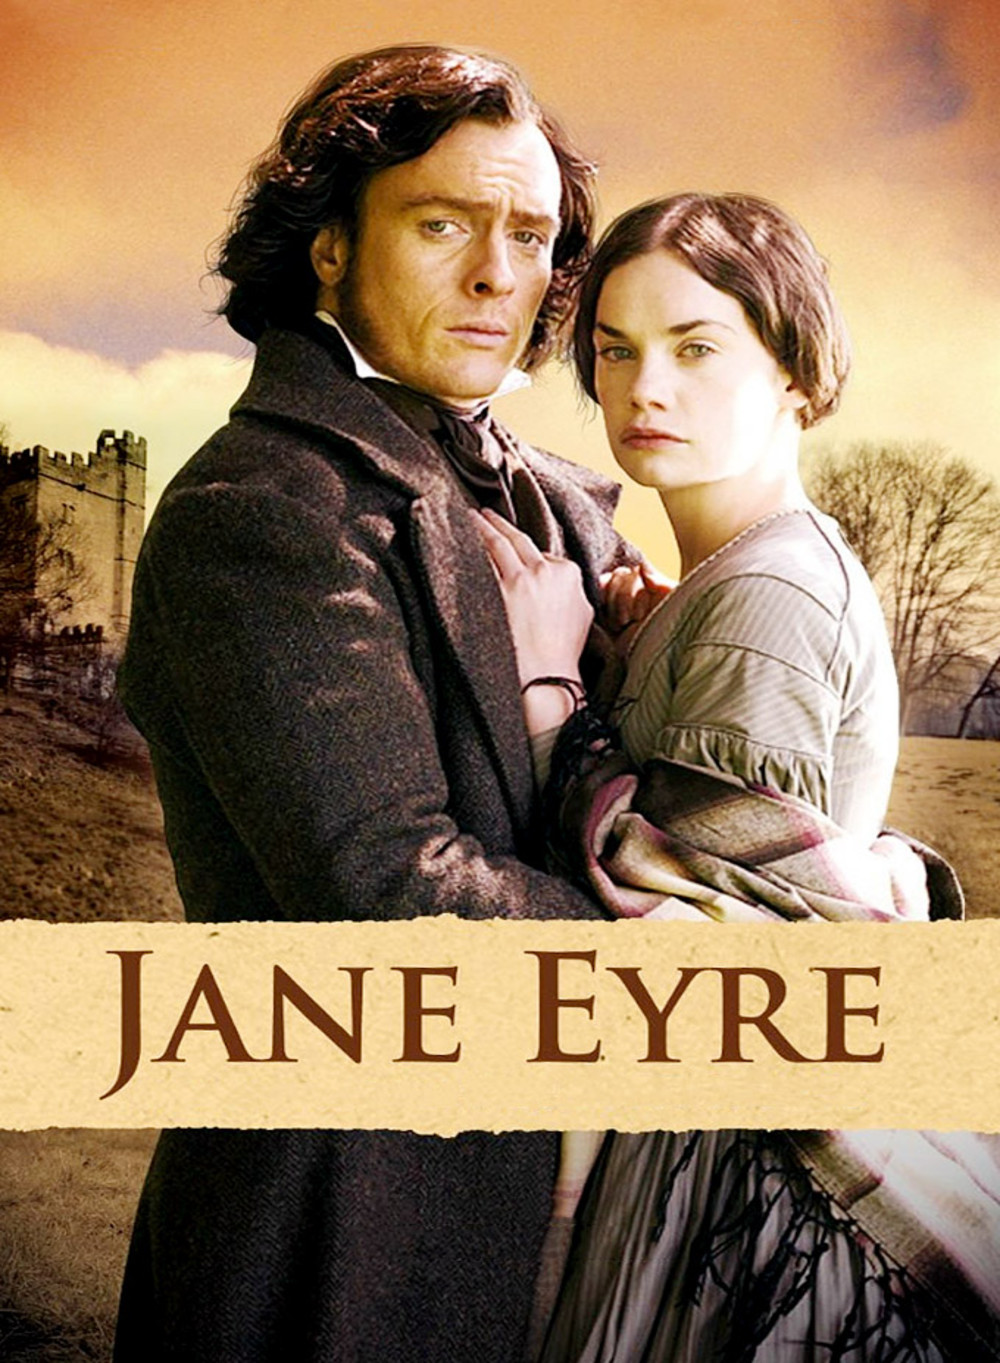 Jane Eyre 1. Évad online